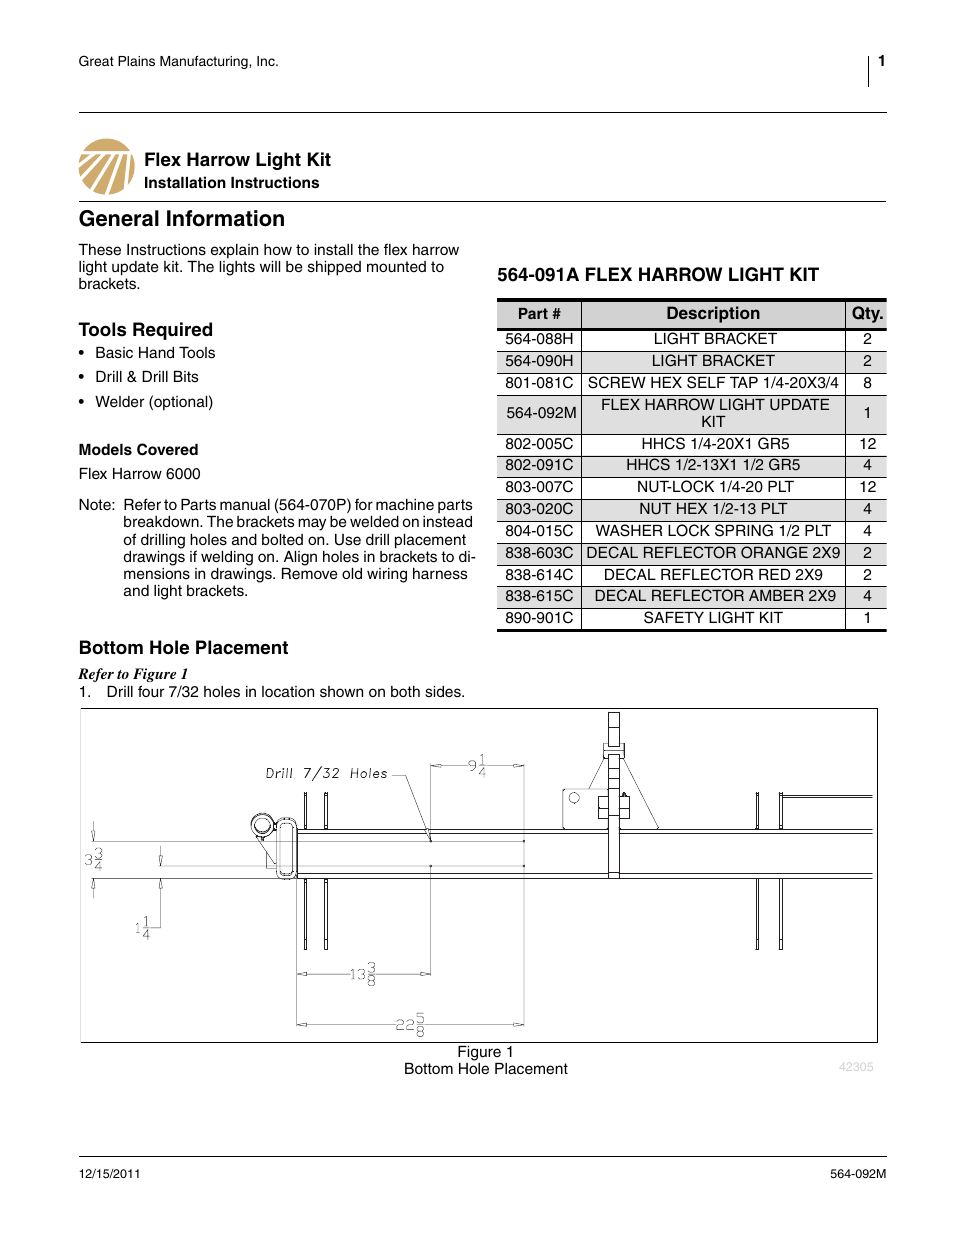 Great Plains Flex Harrow Light Kit User Manual | 2 pages